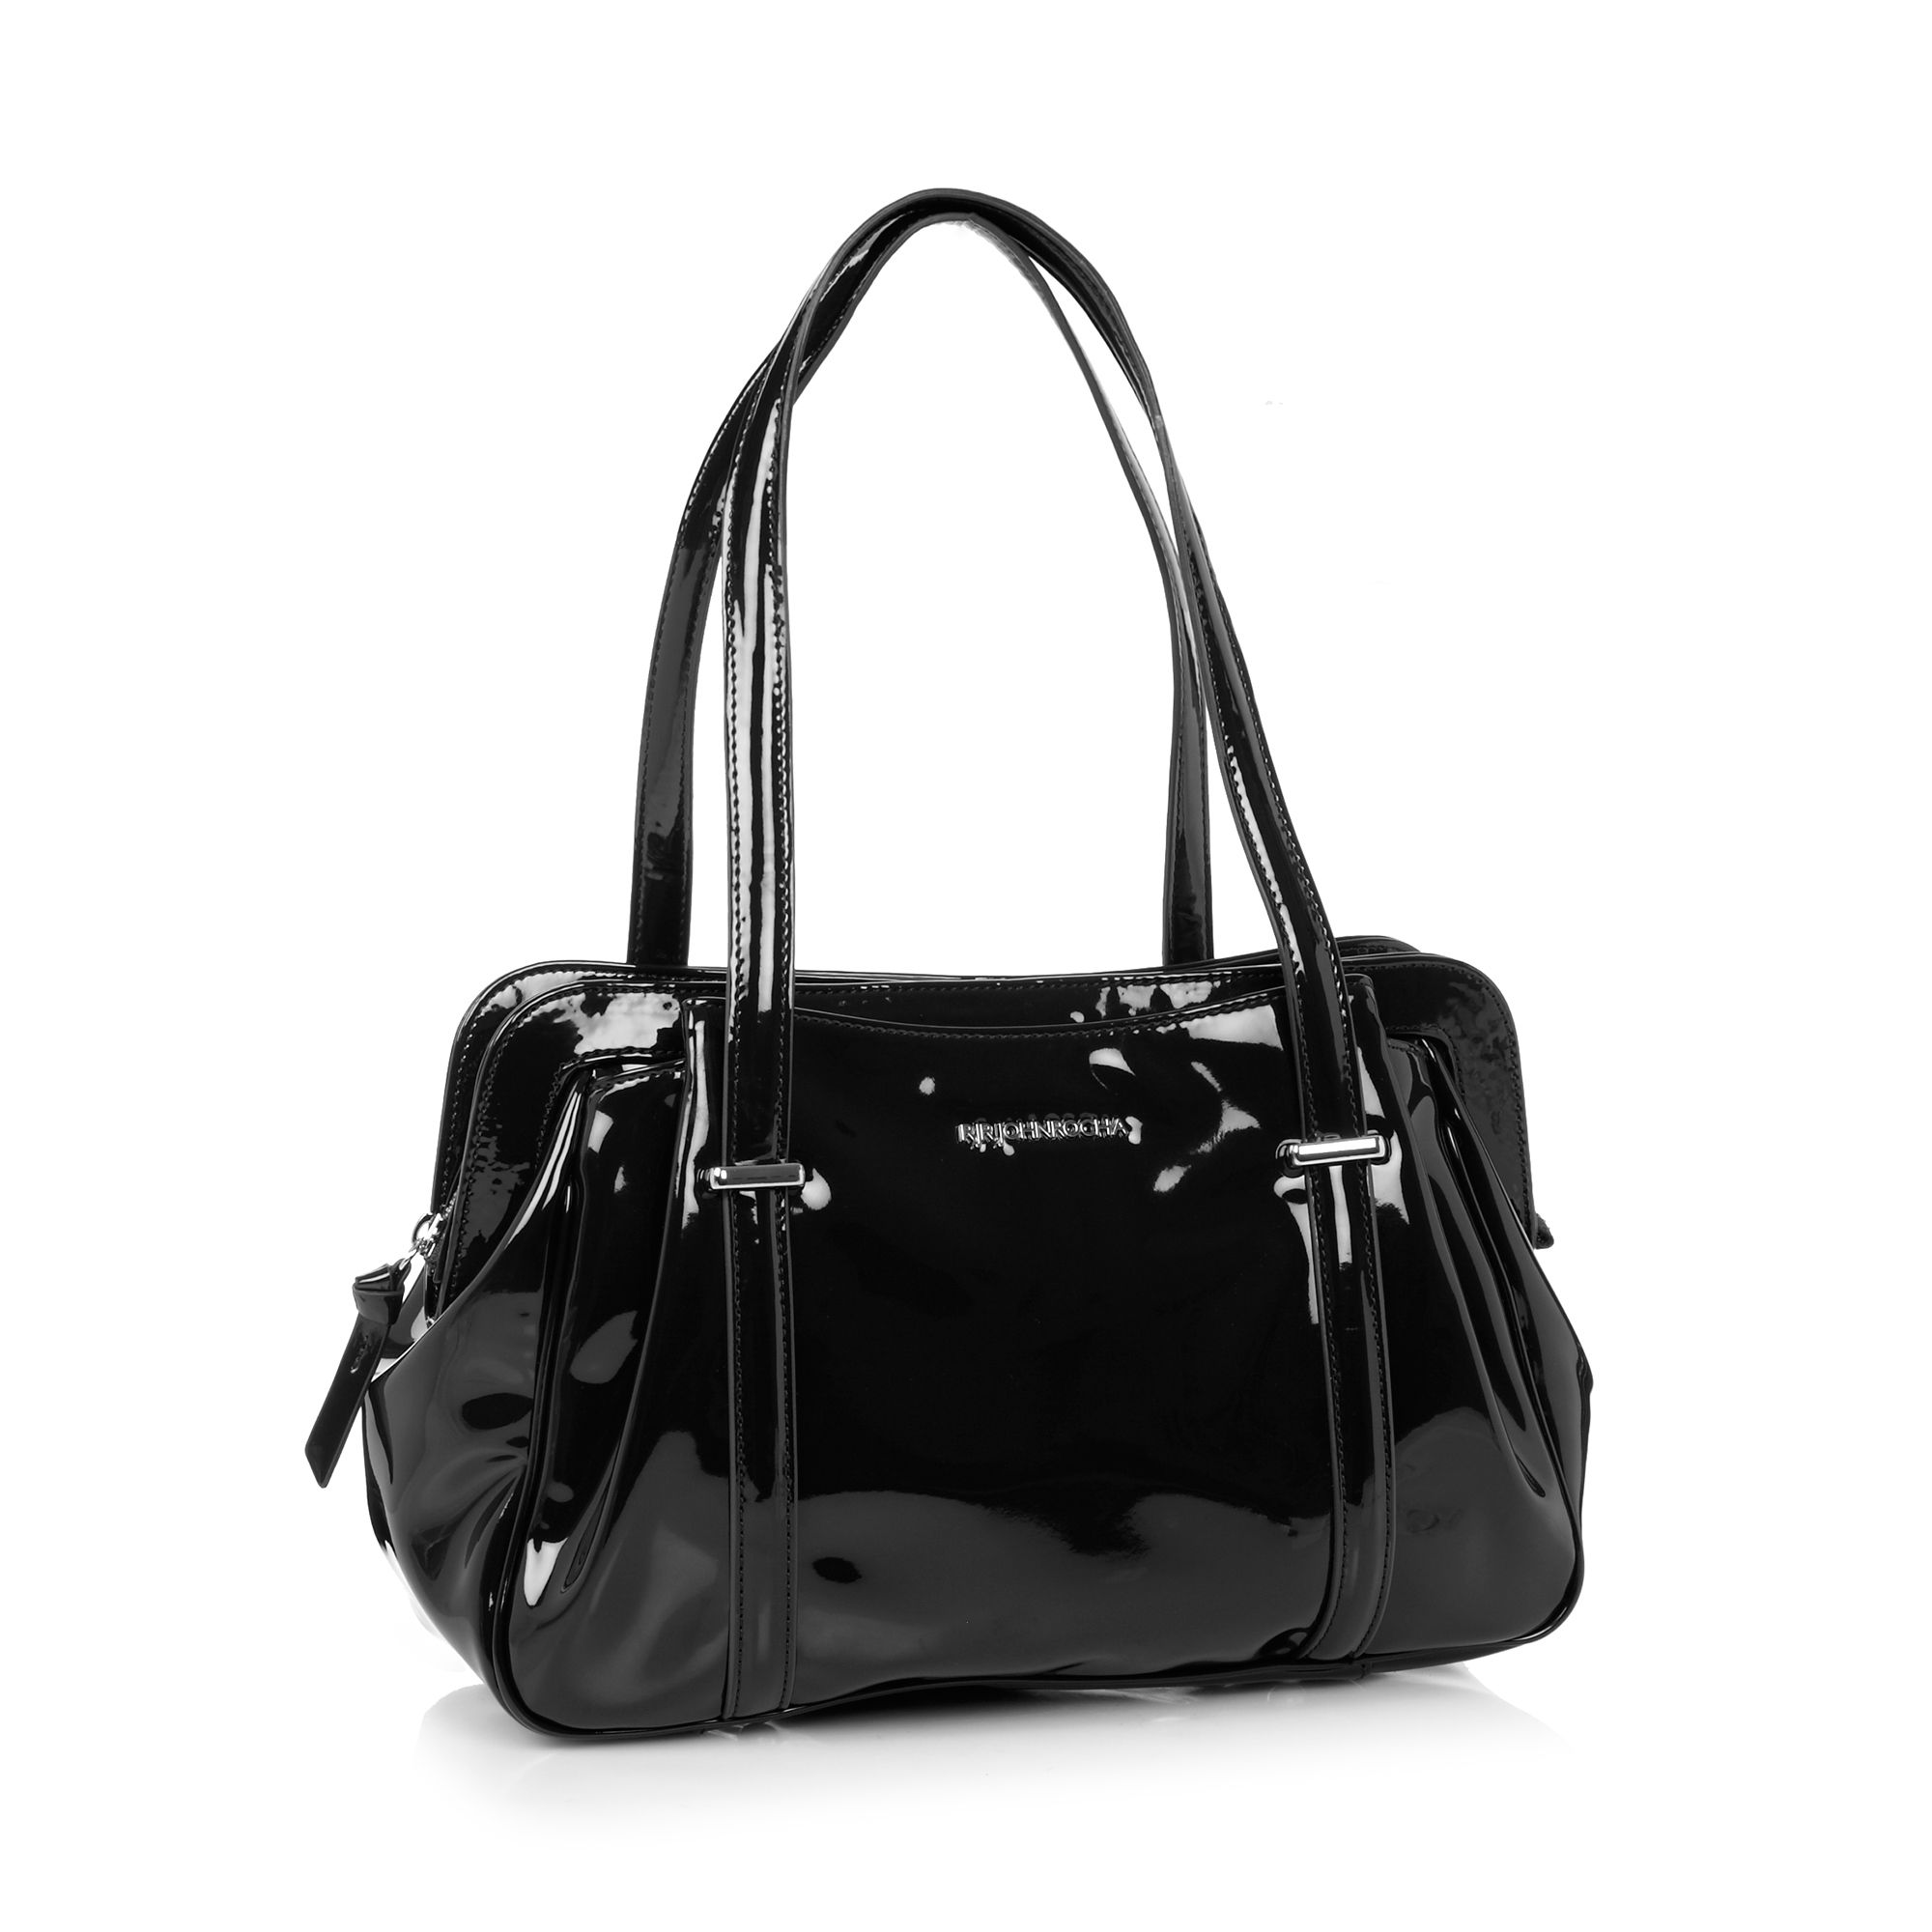 Rjr.John Rocha Womens Designer Black Patent Shoulder Bag From Debenhams | eBay